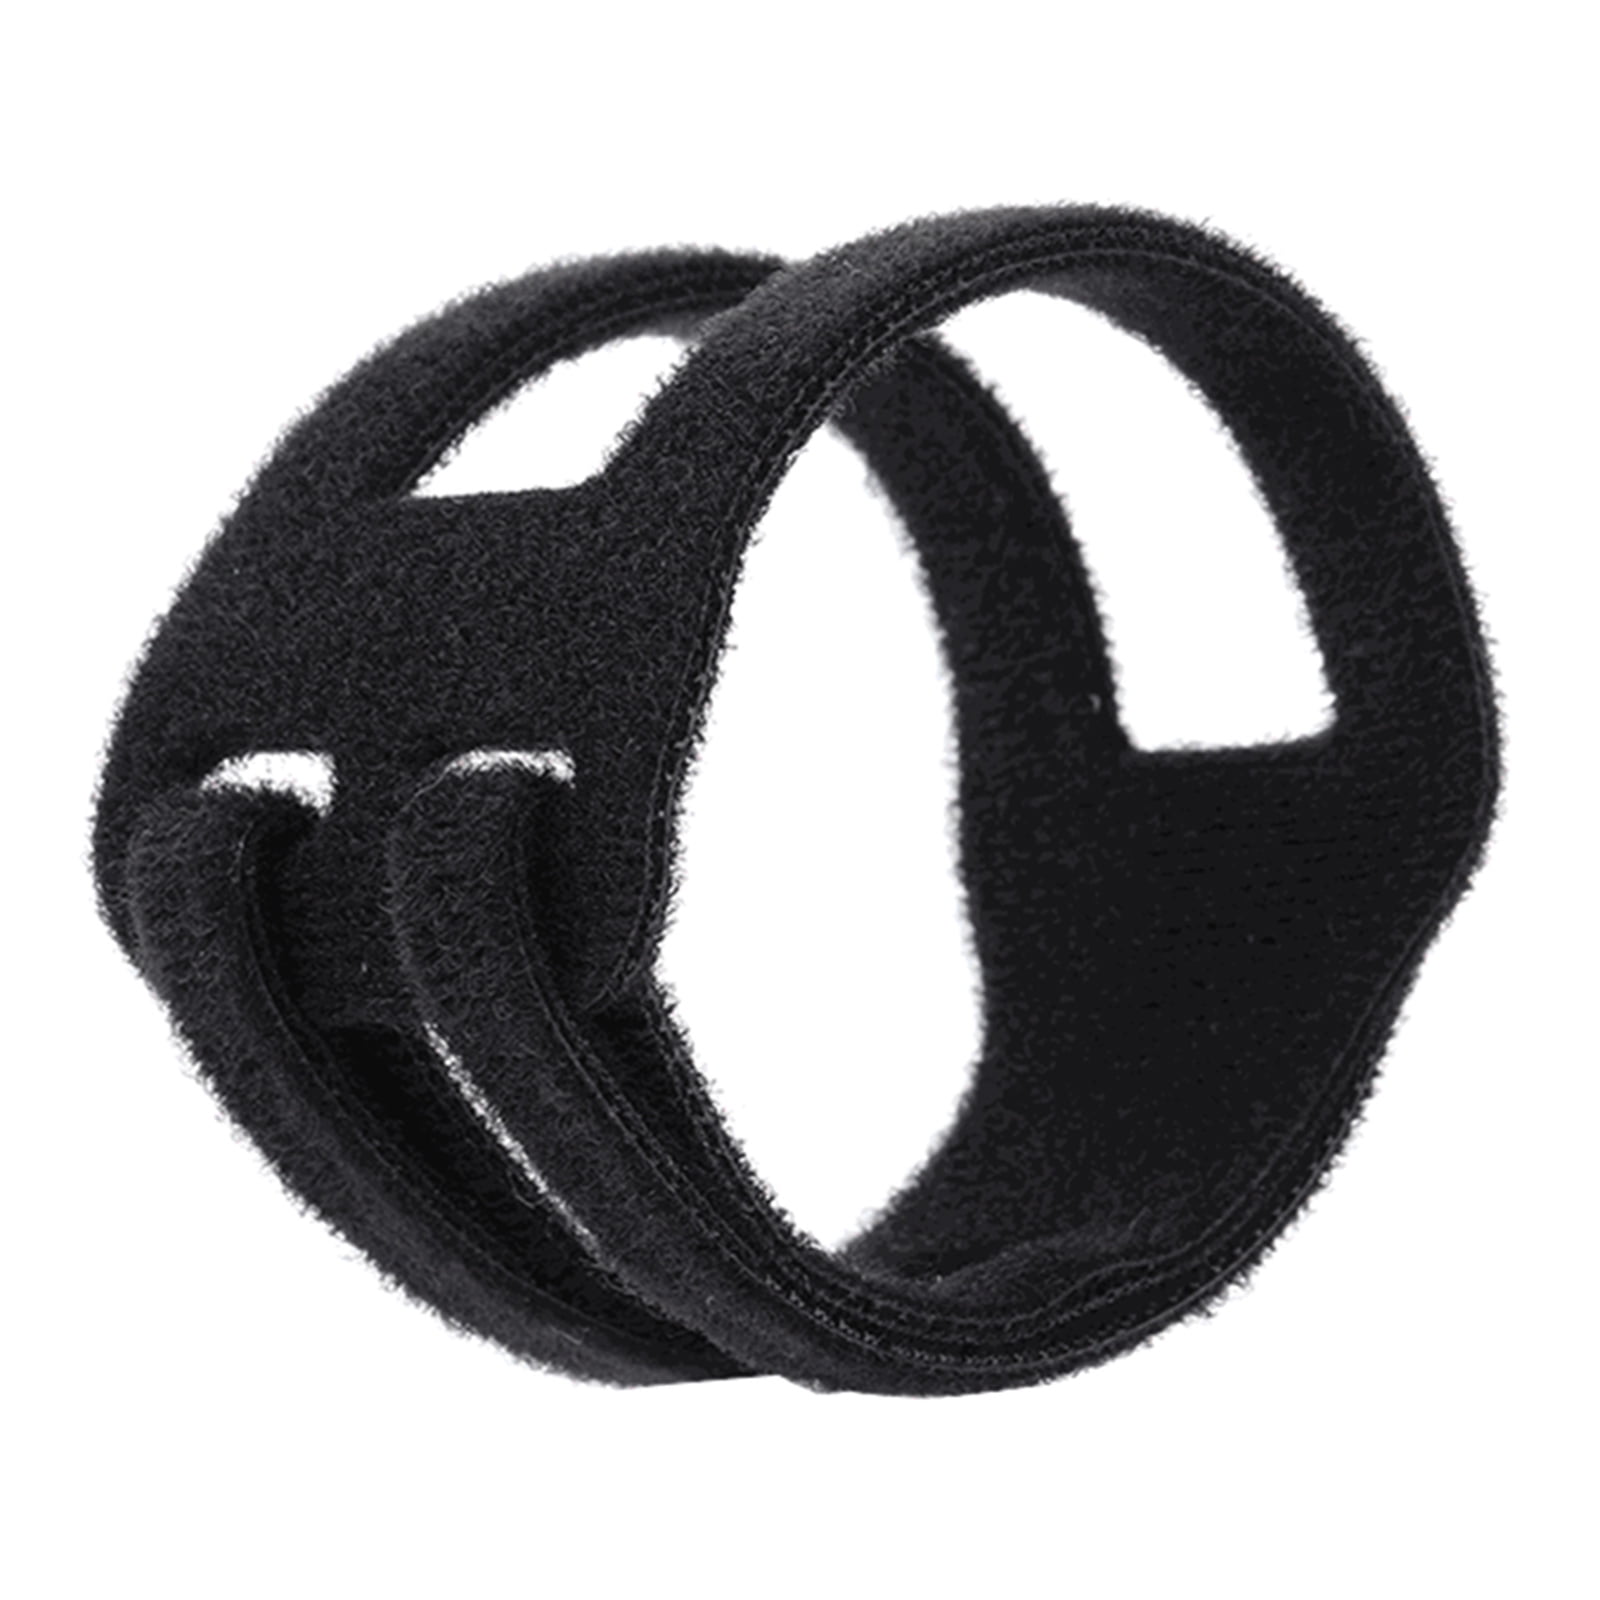 XINYTEC TFCC Wrist Brace Adjustable Wrist Band for Ulnar Sided Wrist ...